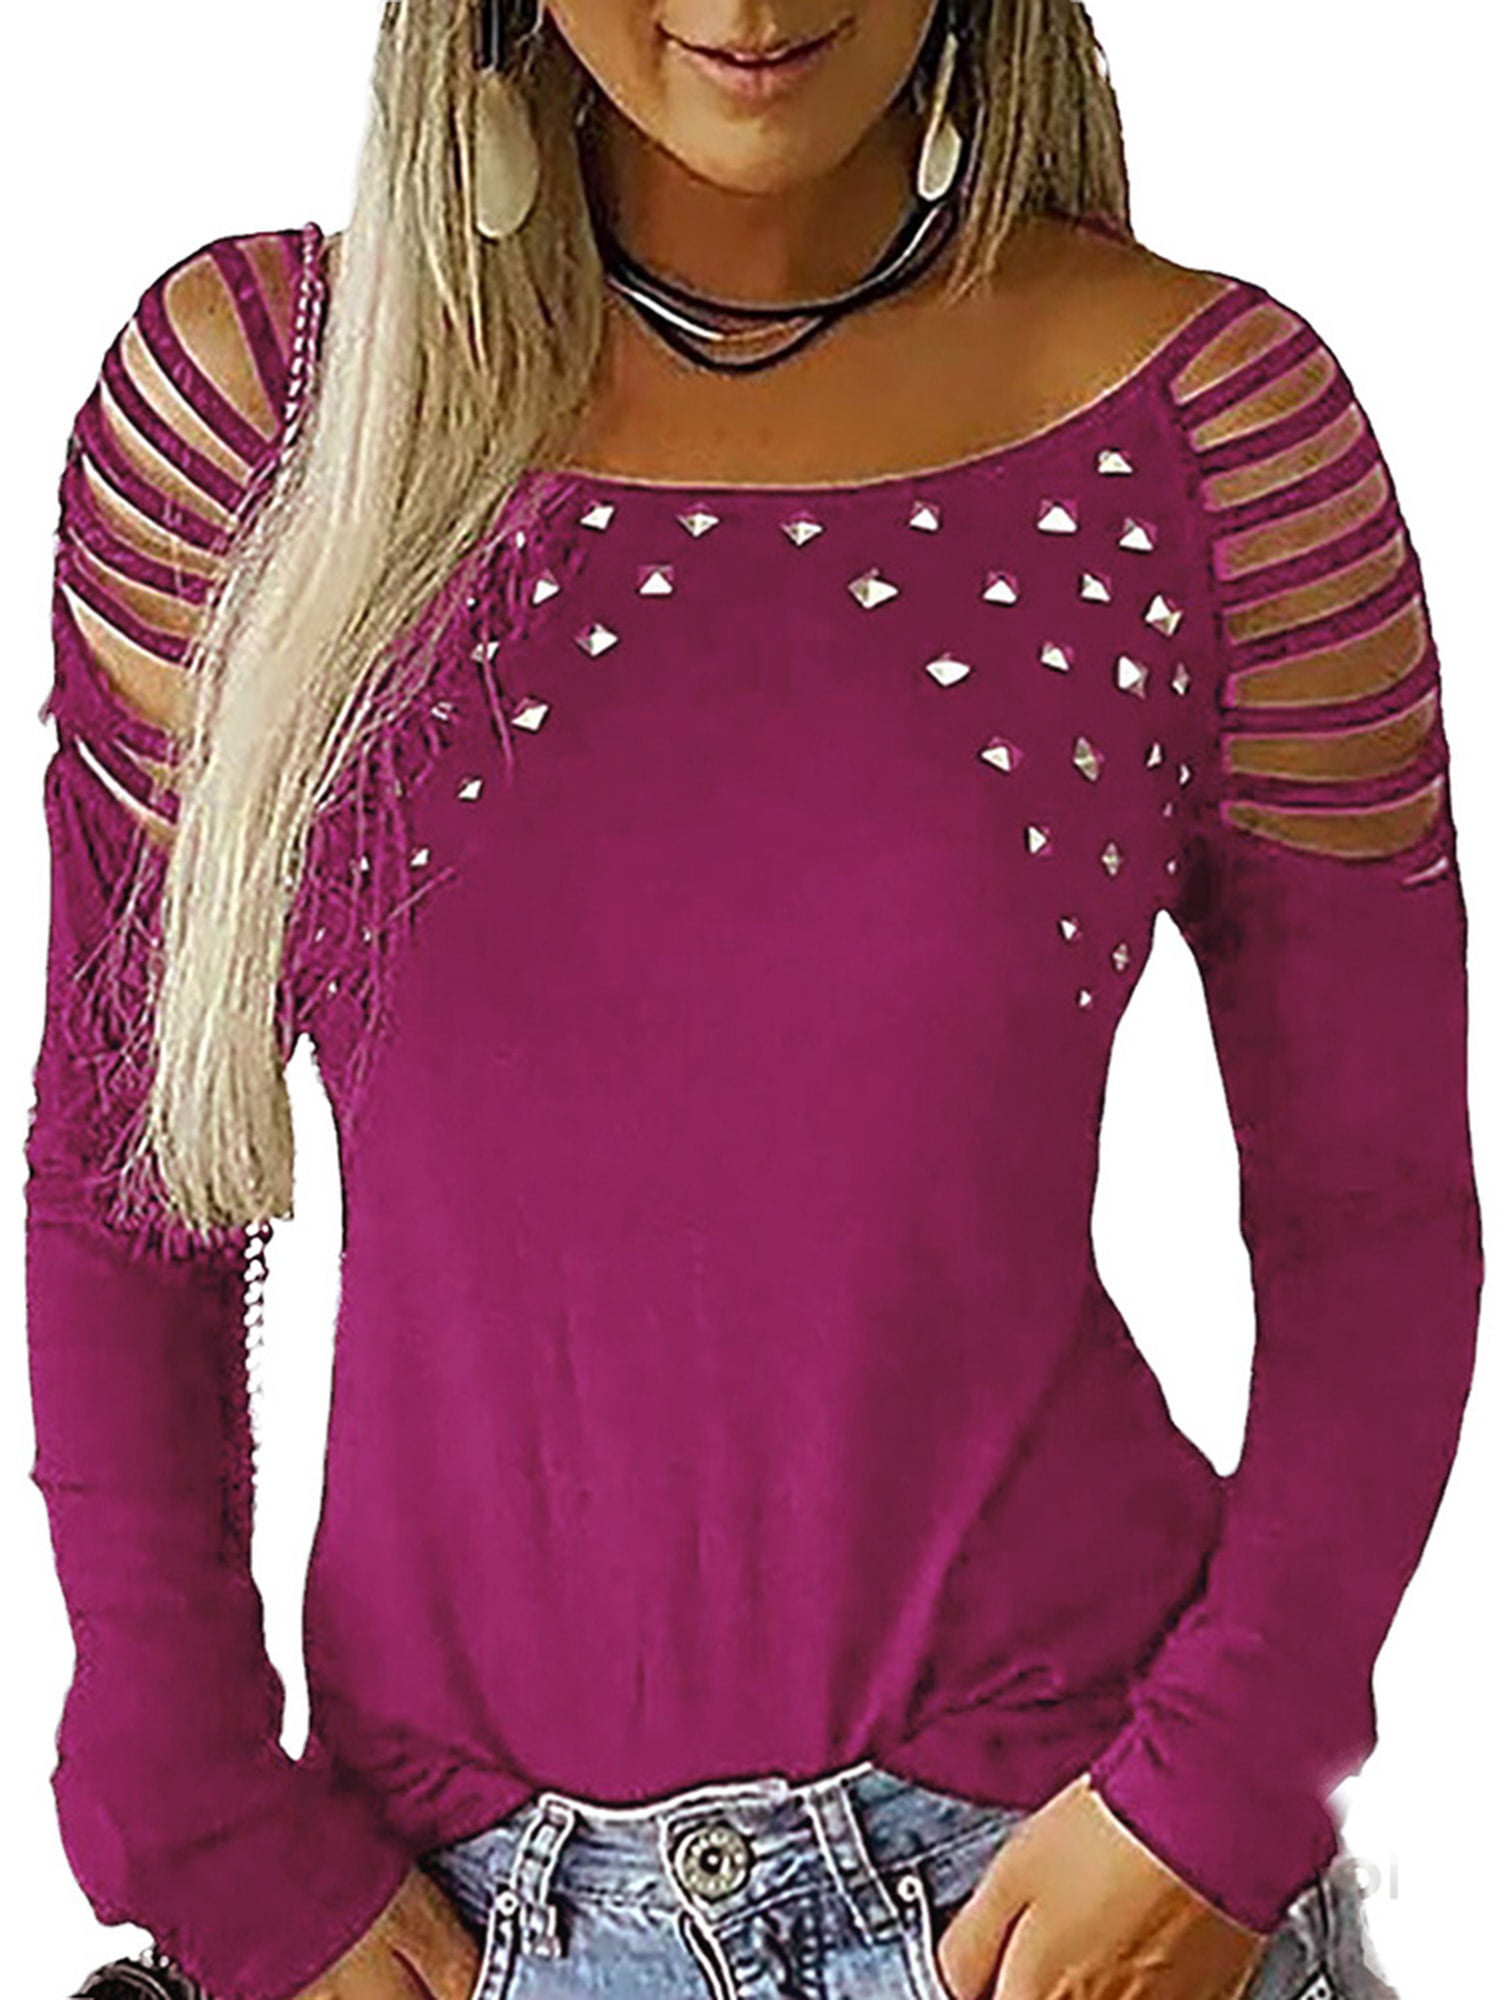 LAPA Women Long Sleeve Tops Cold Shoulder Rivet Tunic T Shirt Blouse ...